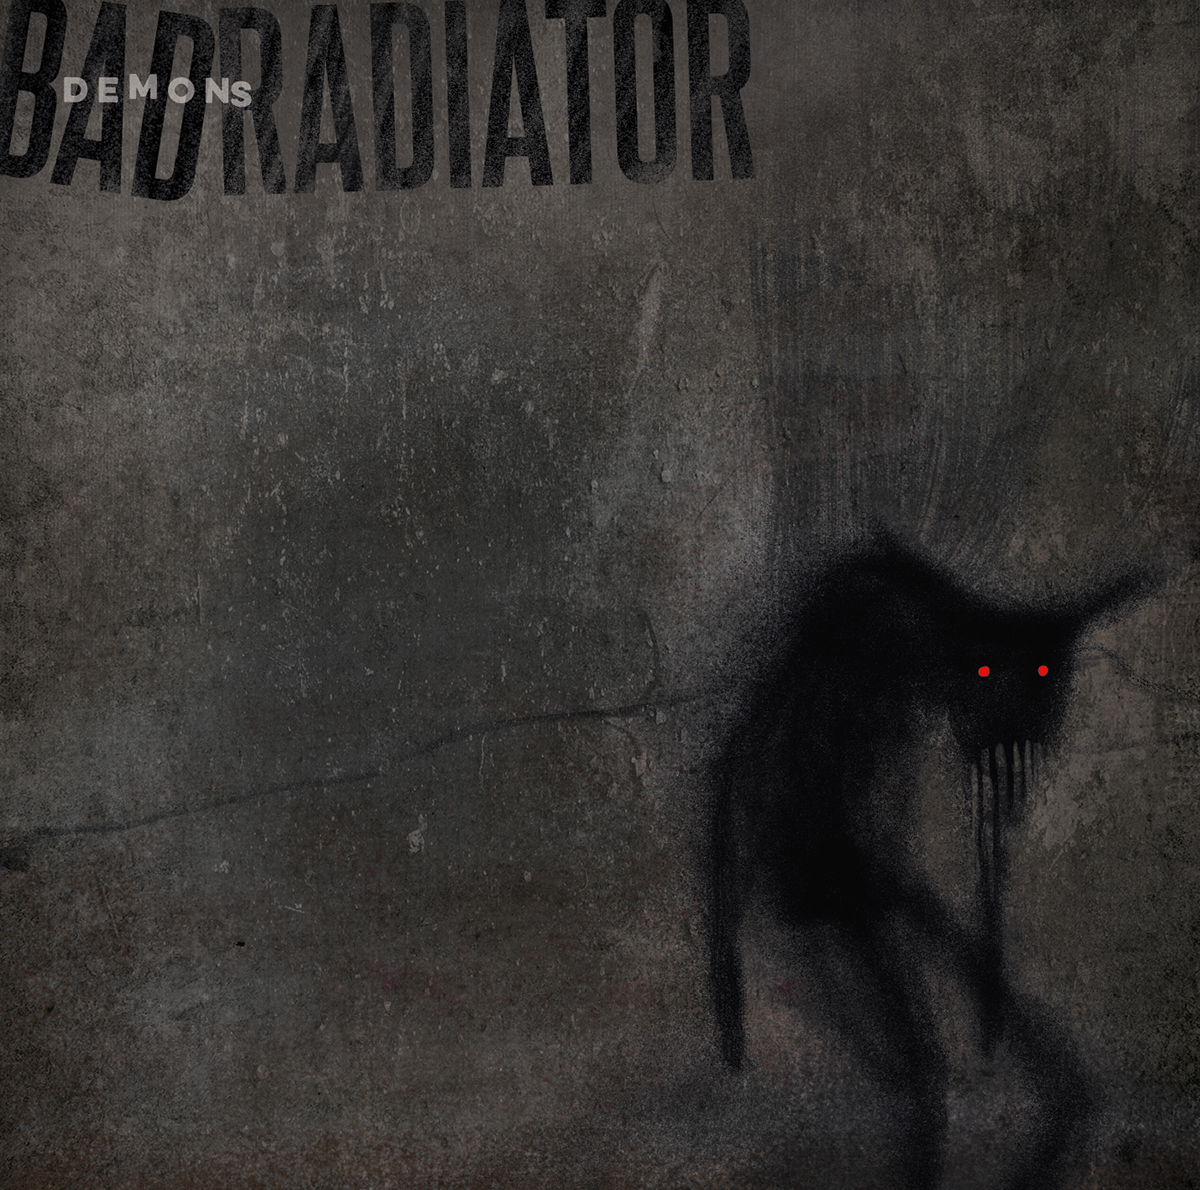 Bad Radiator Demons Visual Narrative Painting art dark demonic devil bunny